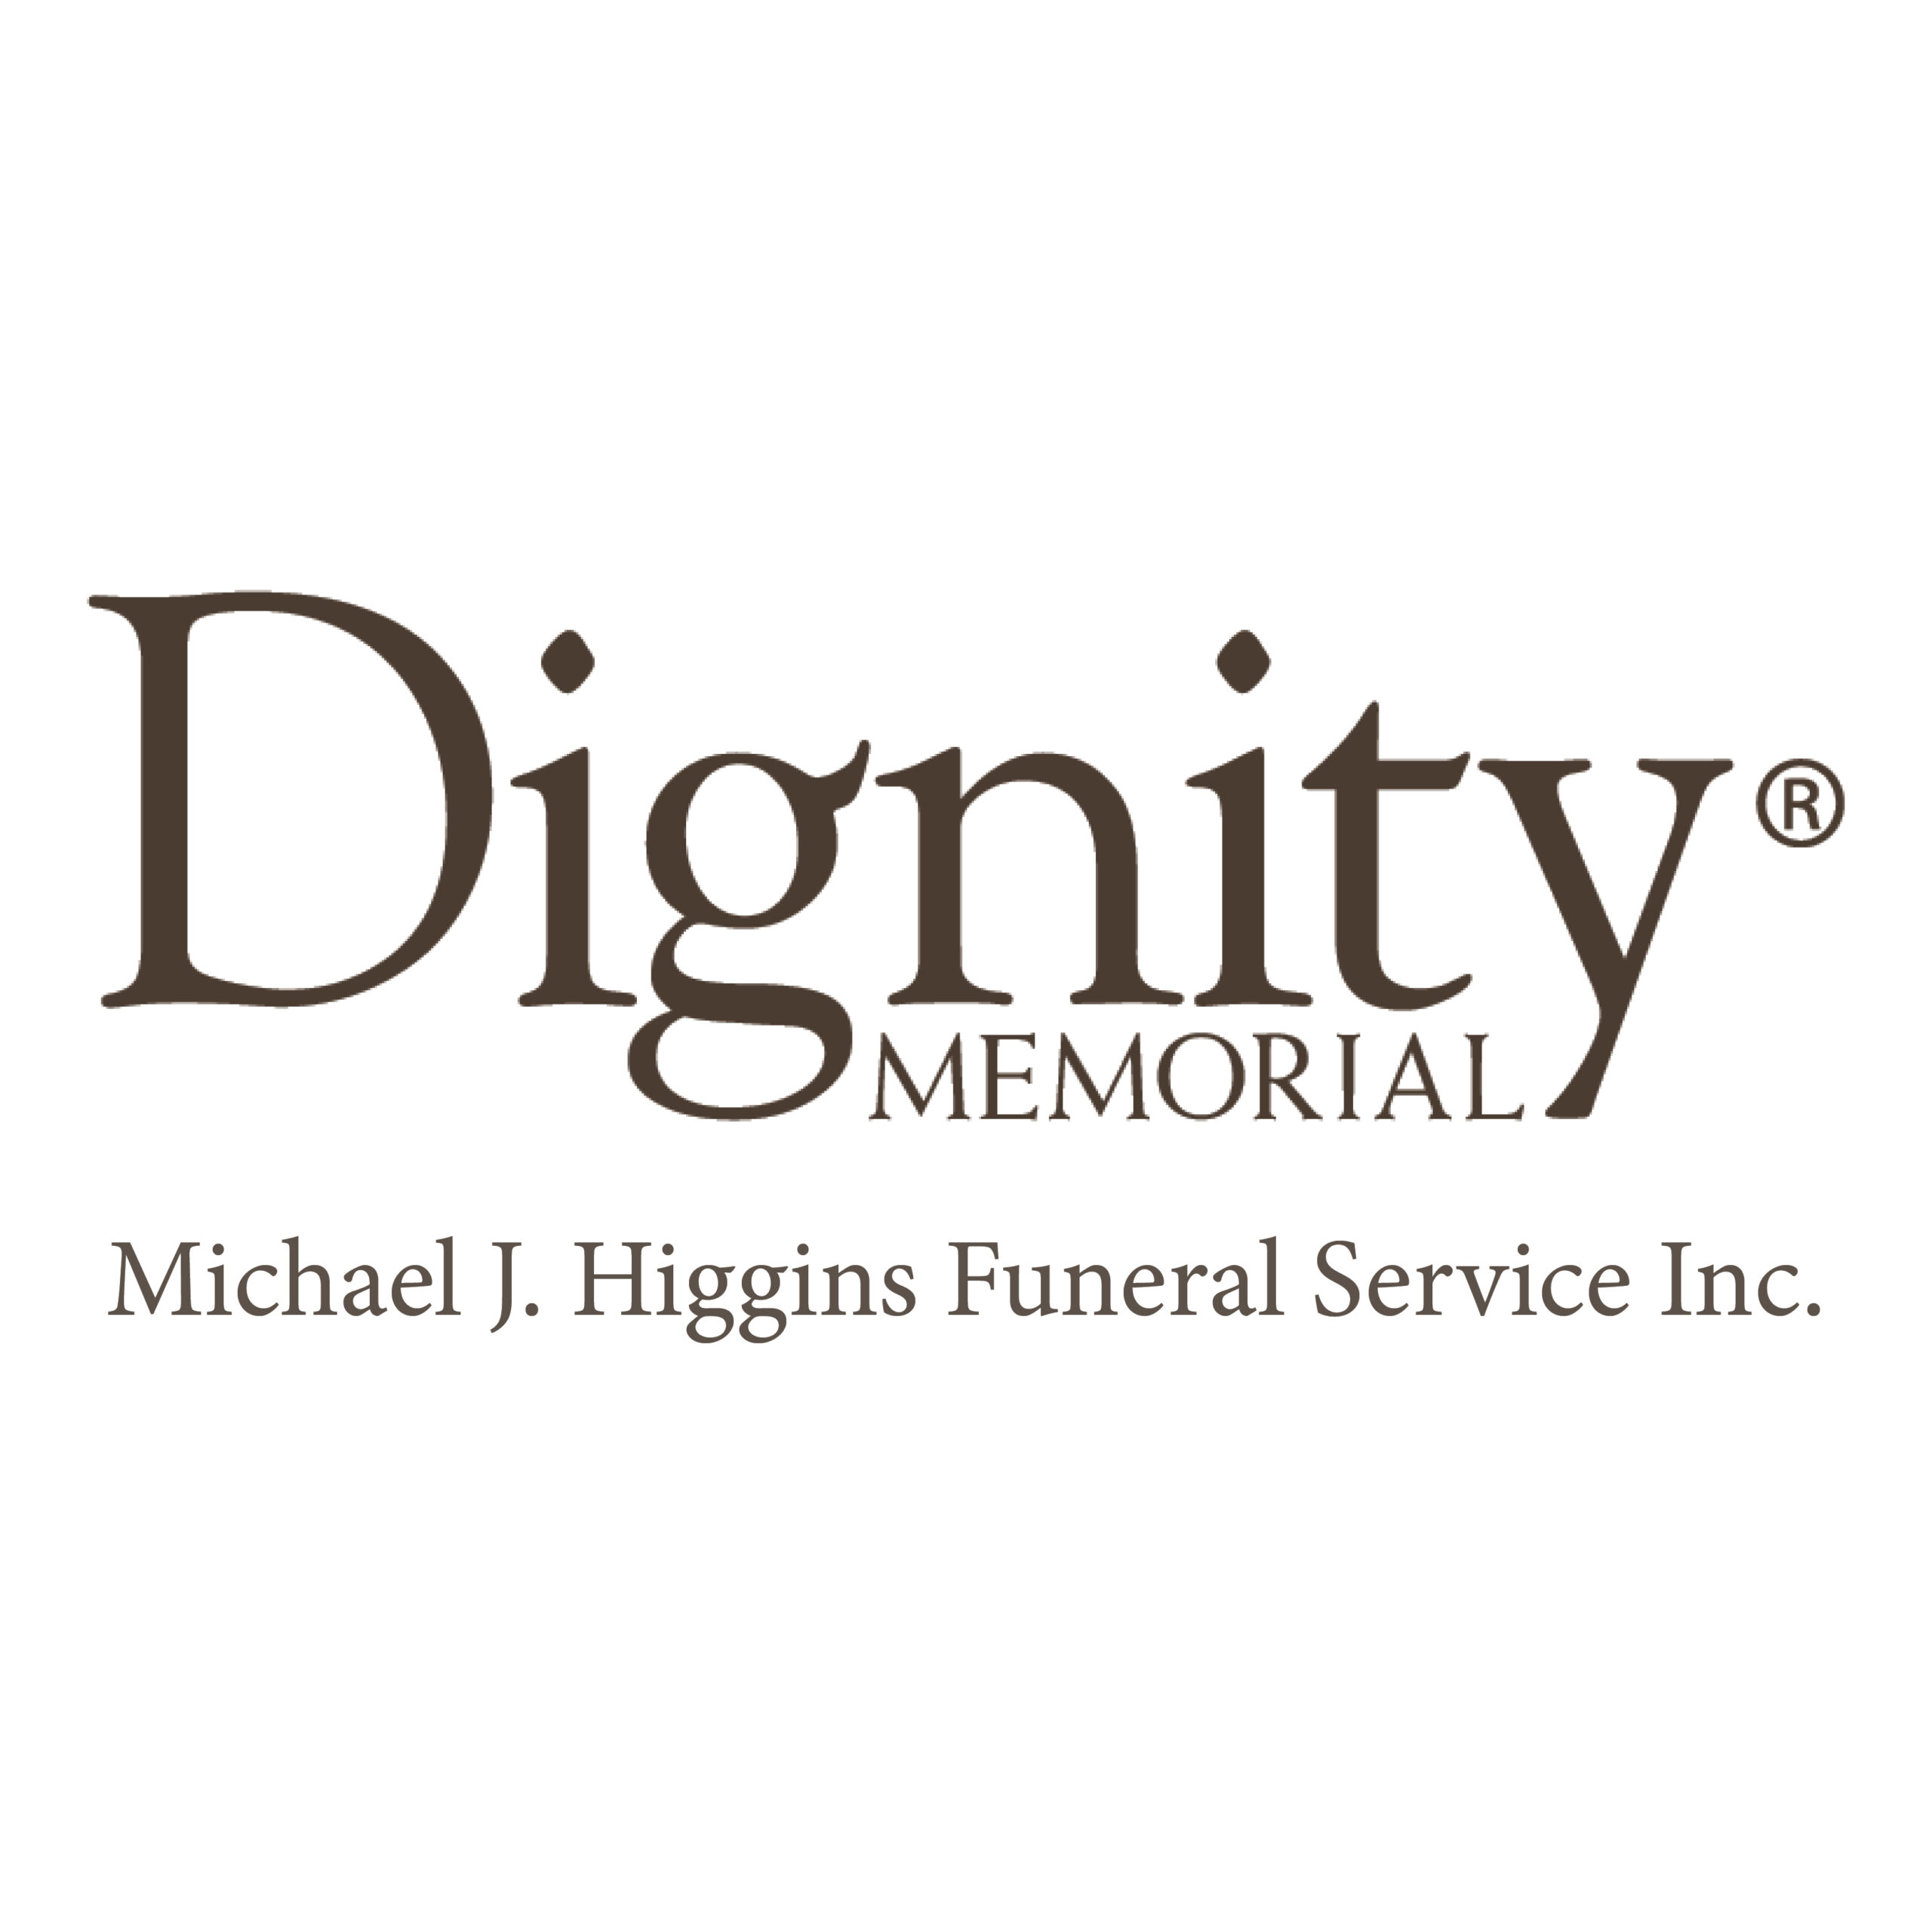 Michael J. Higgins Funeral Service!